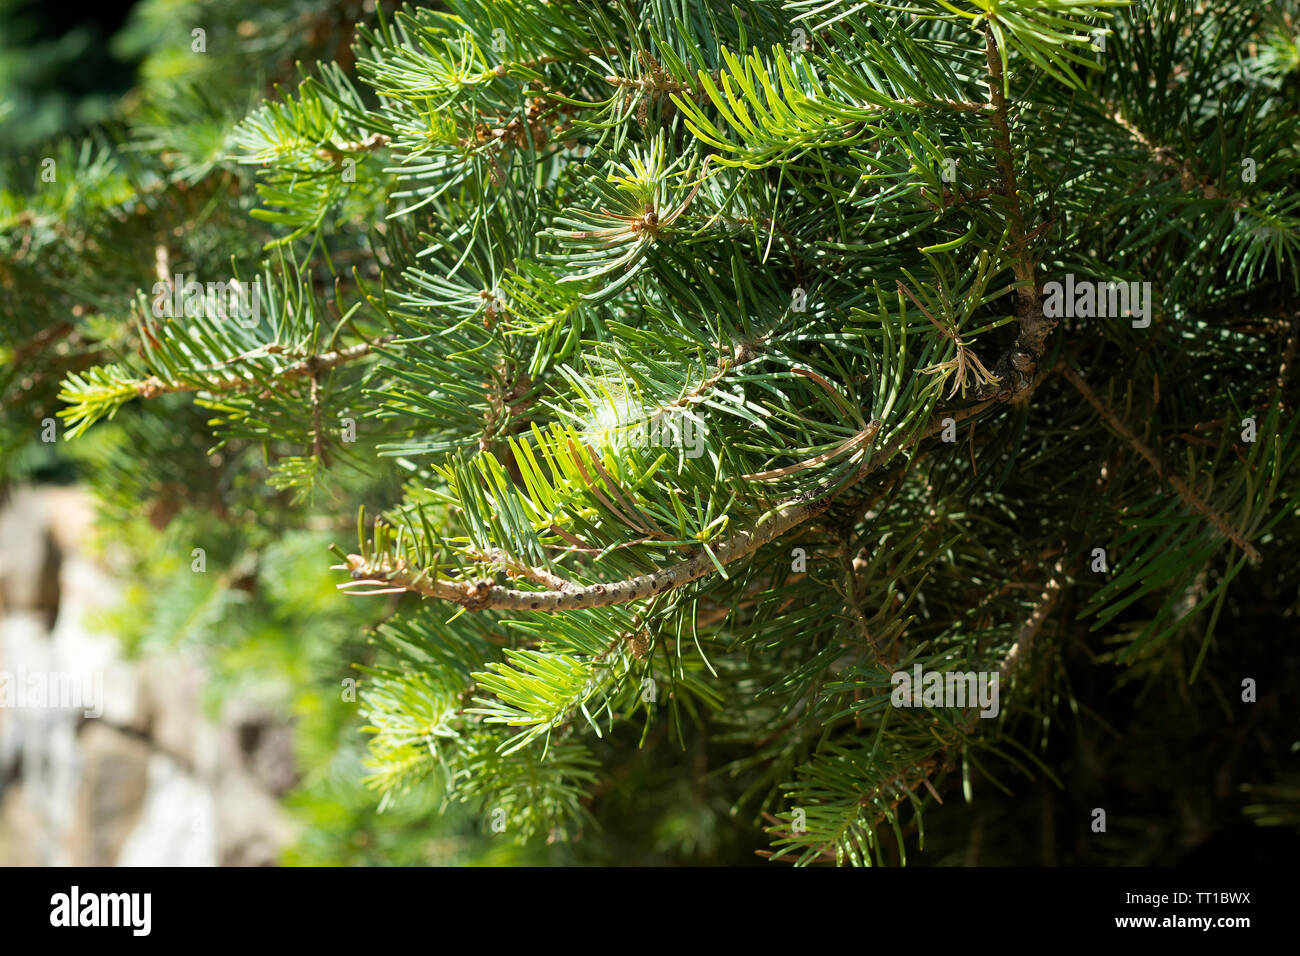 Dwarf Globe Scots Pine Pinus sylvestris Globosa Nana evergreen shrub. Green needles with drops of rain. Macro Stock Photo